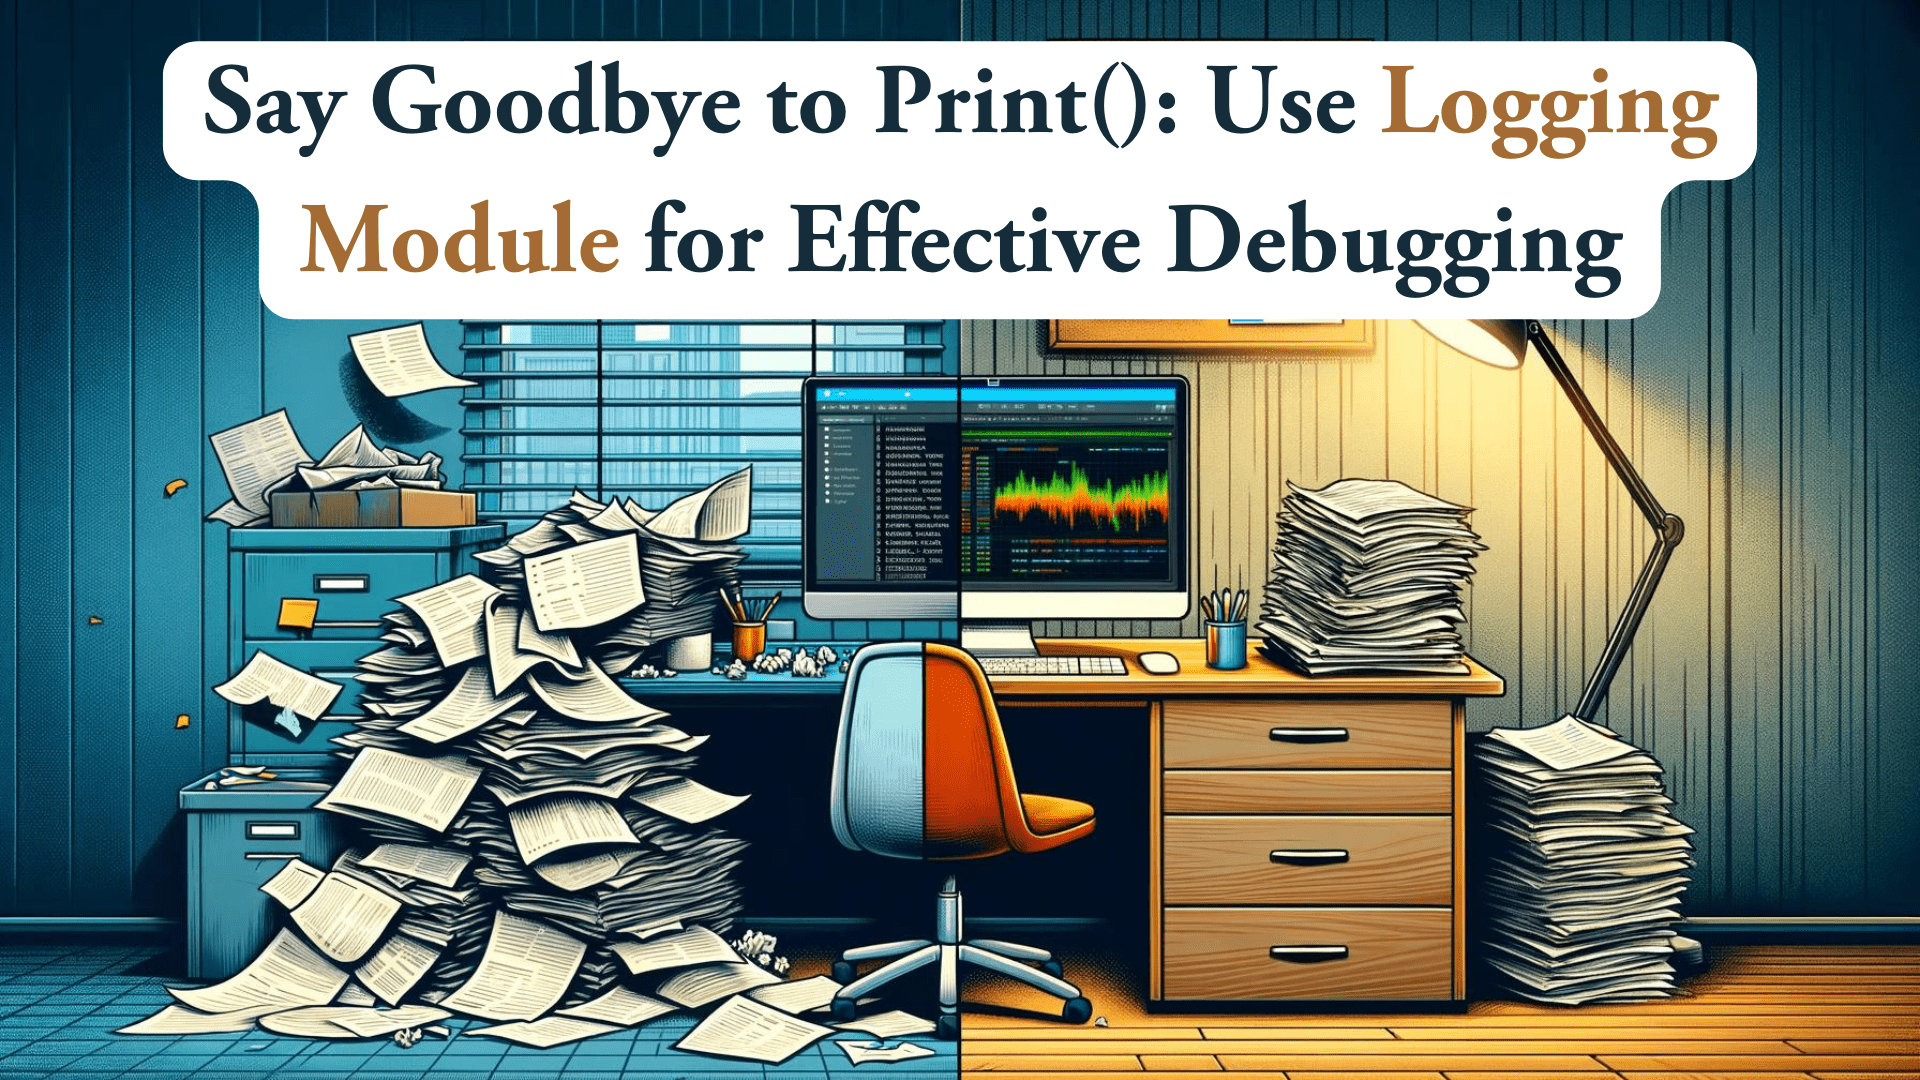 Say Goodbye to Print(): Use Logging Module